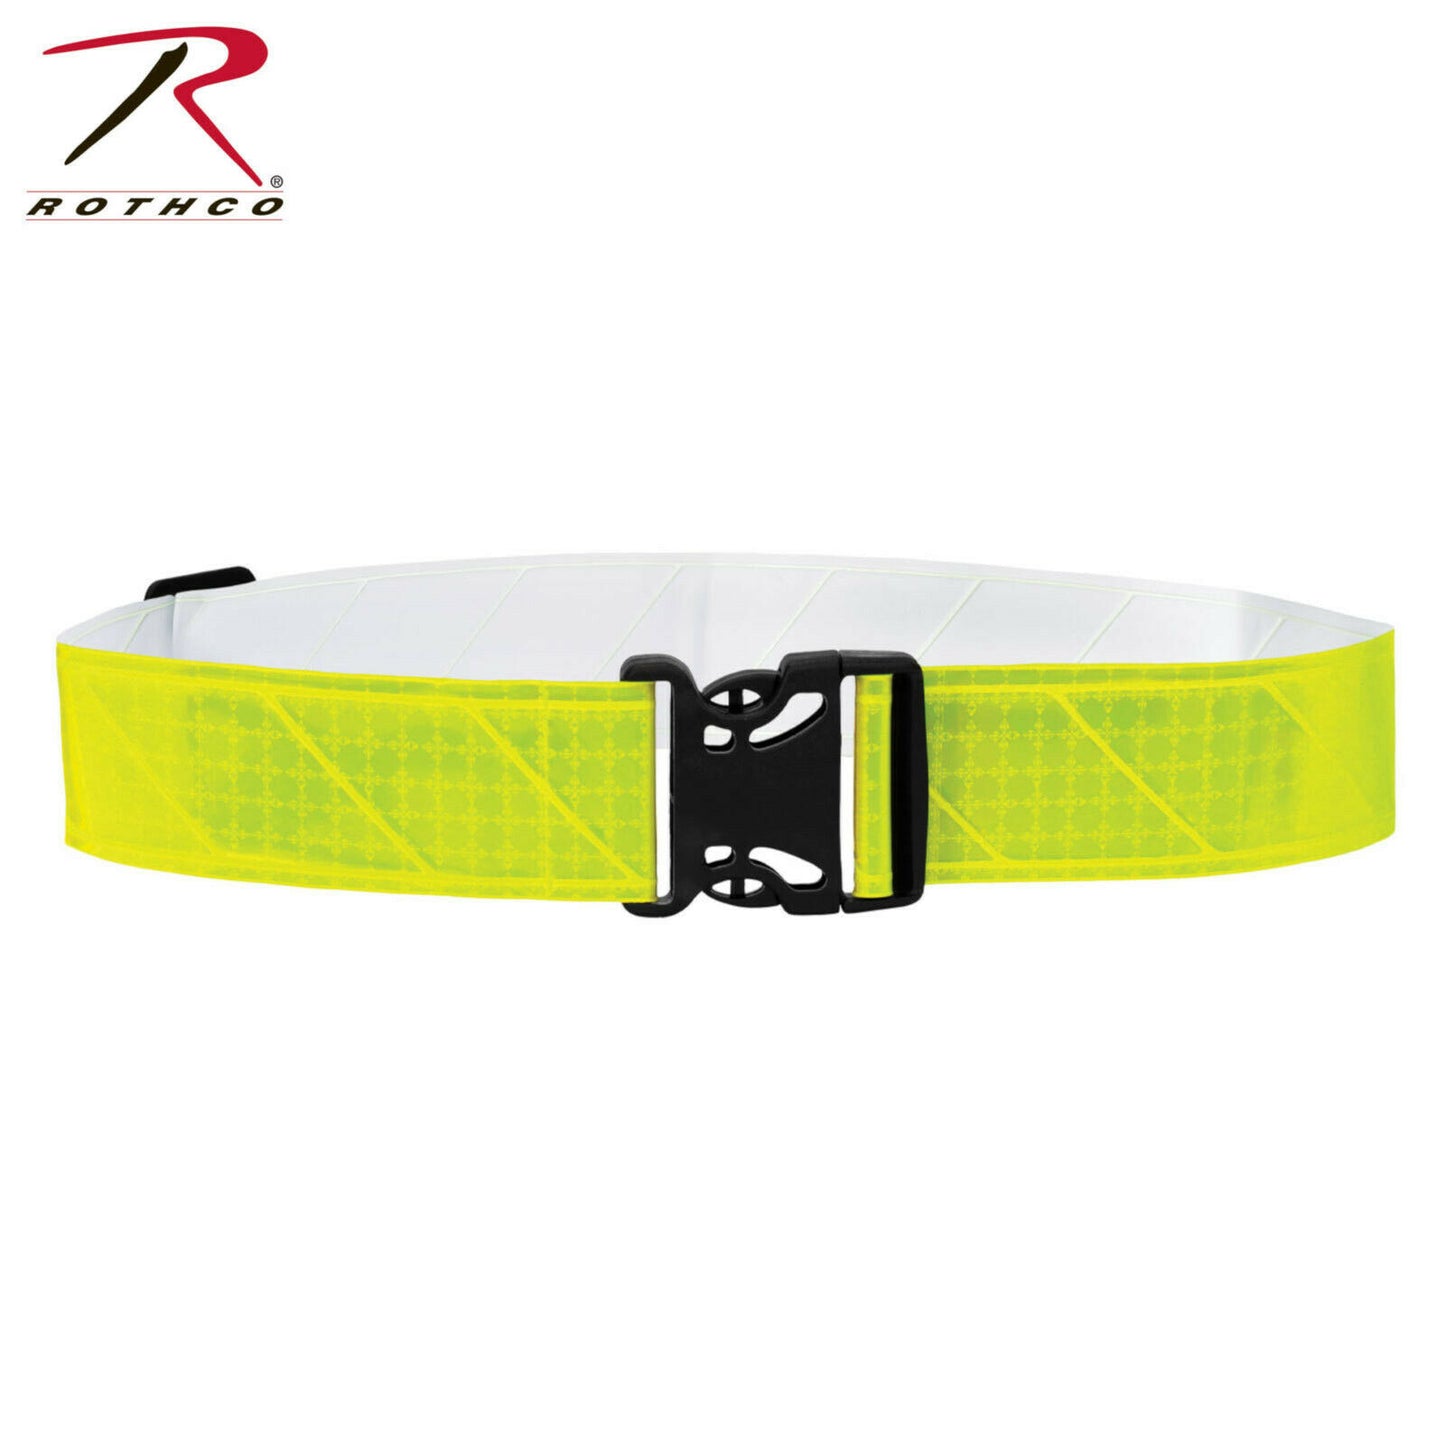 Rothco Lightweight Reflective Army Physical Training Belt - Hi-Viz Neon Yellow